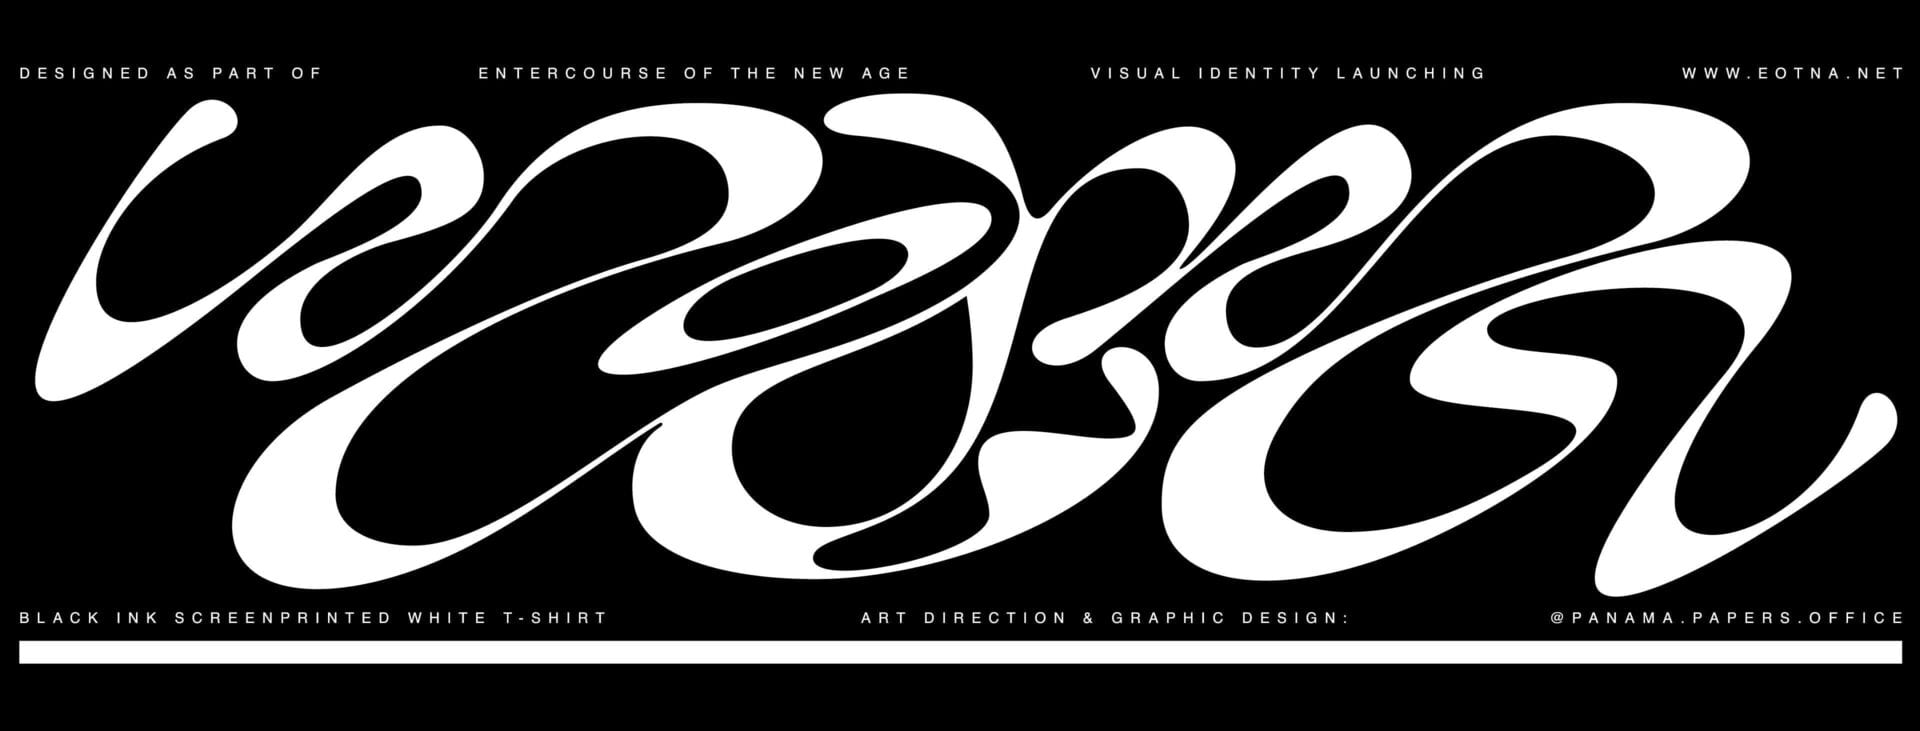 Entercourse of the new age logotype